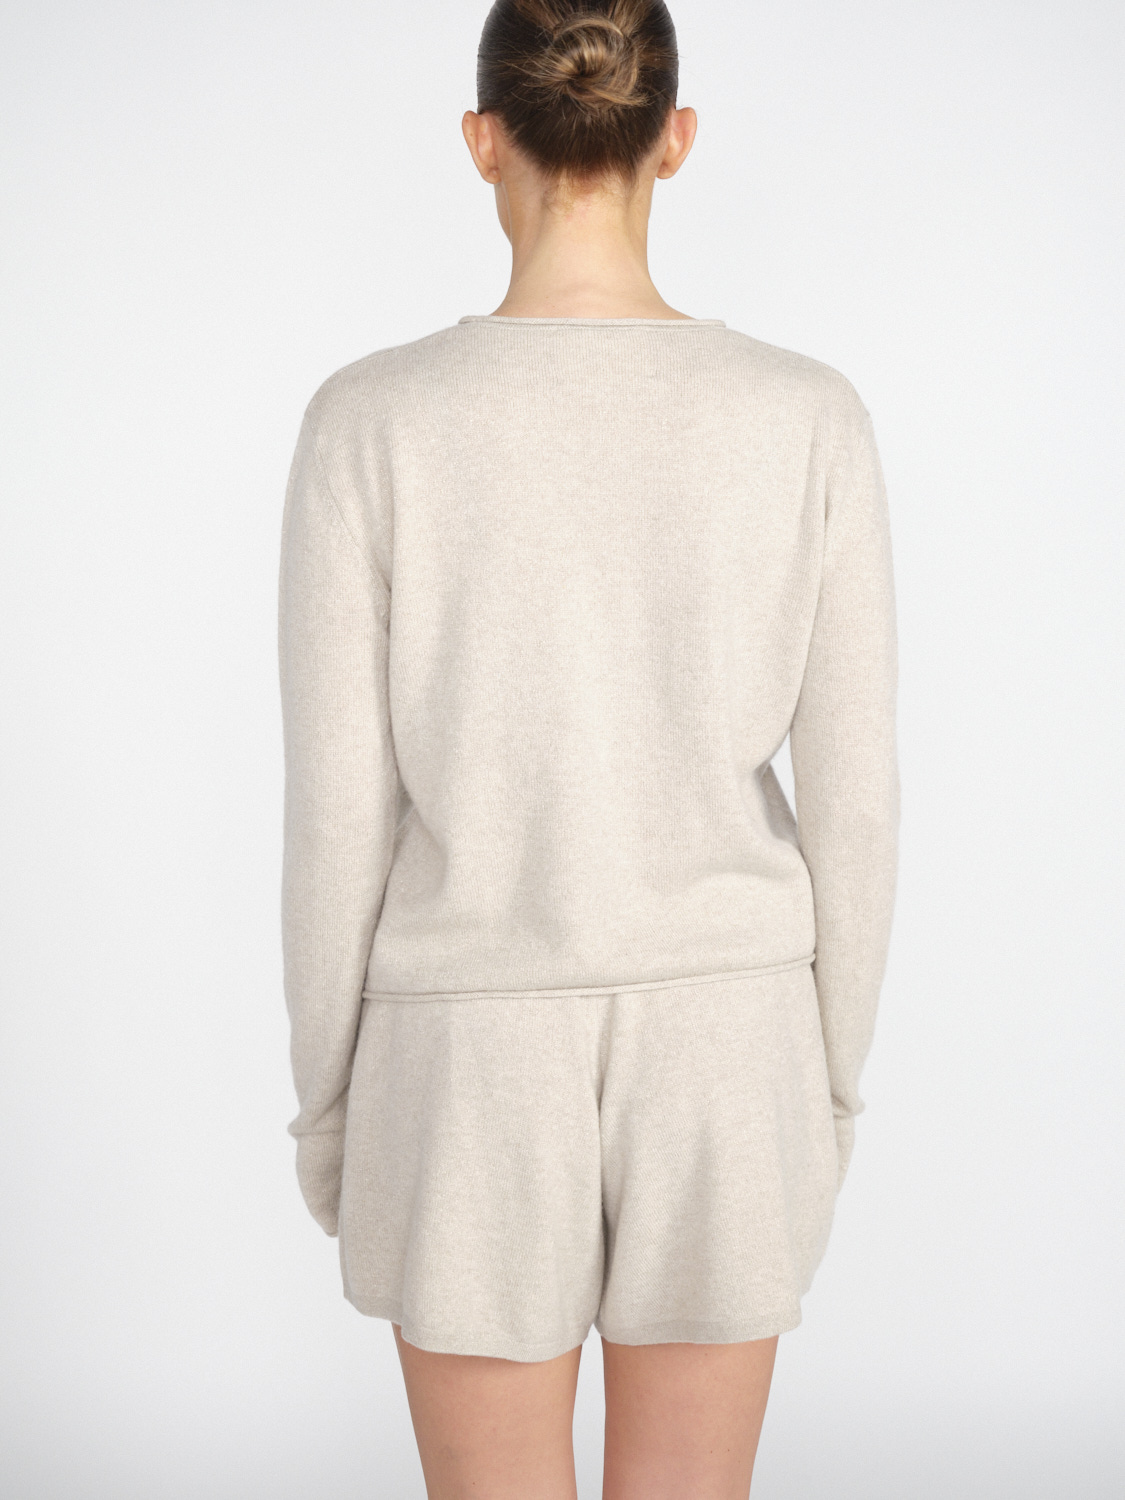 Lisa Yang Ida - Lightweight cashmere jumper with glitter effects  beige M/L